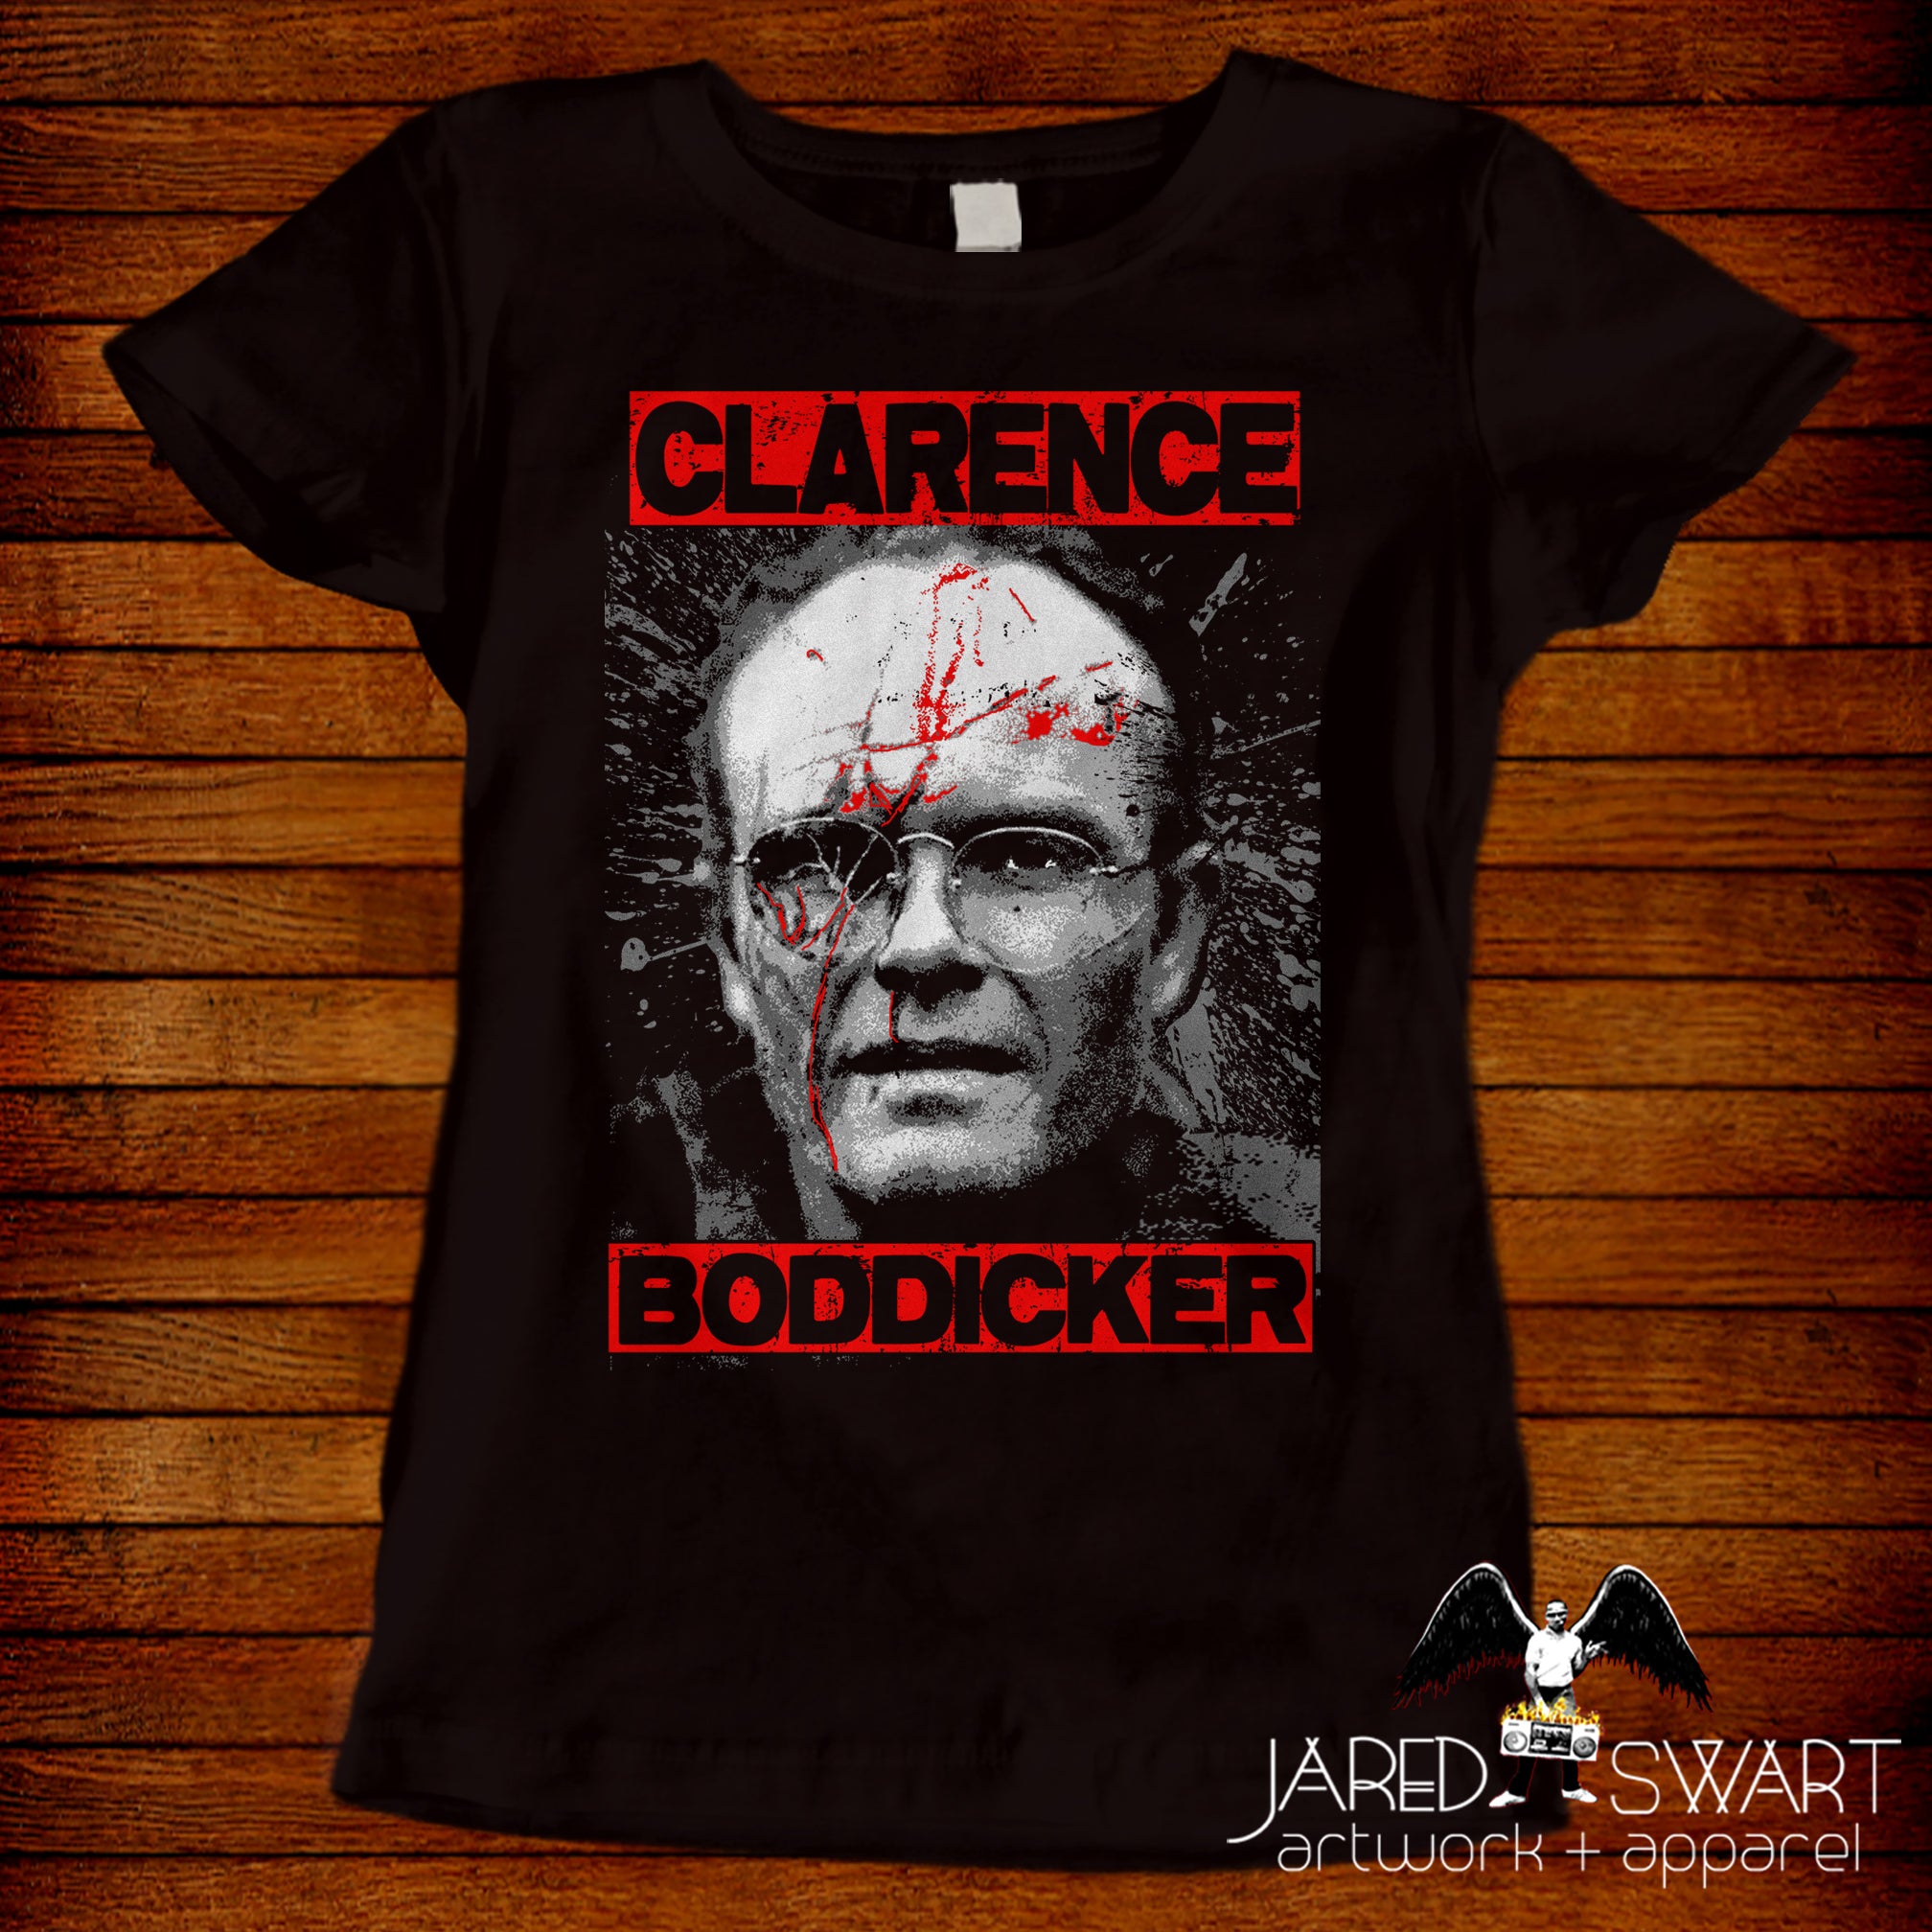 Robocop T-shirt bad guy Clarence Boddicker